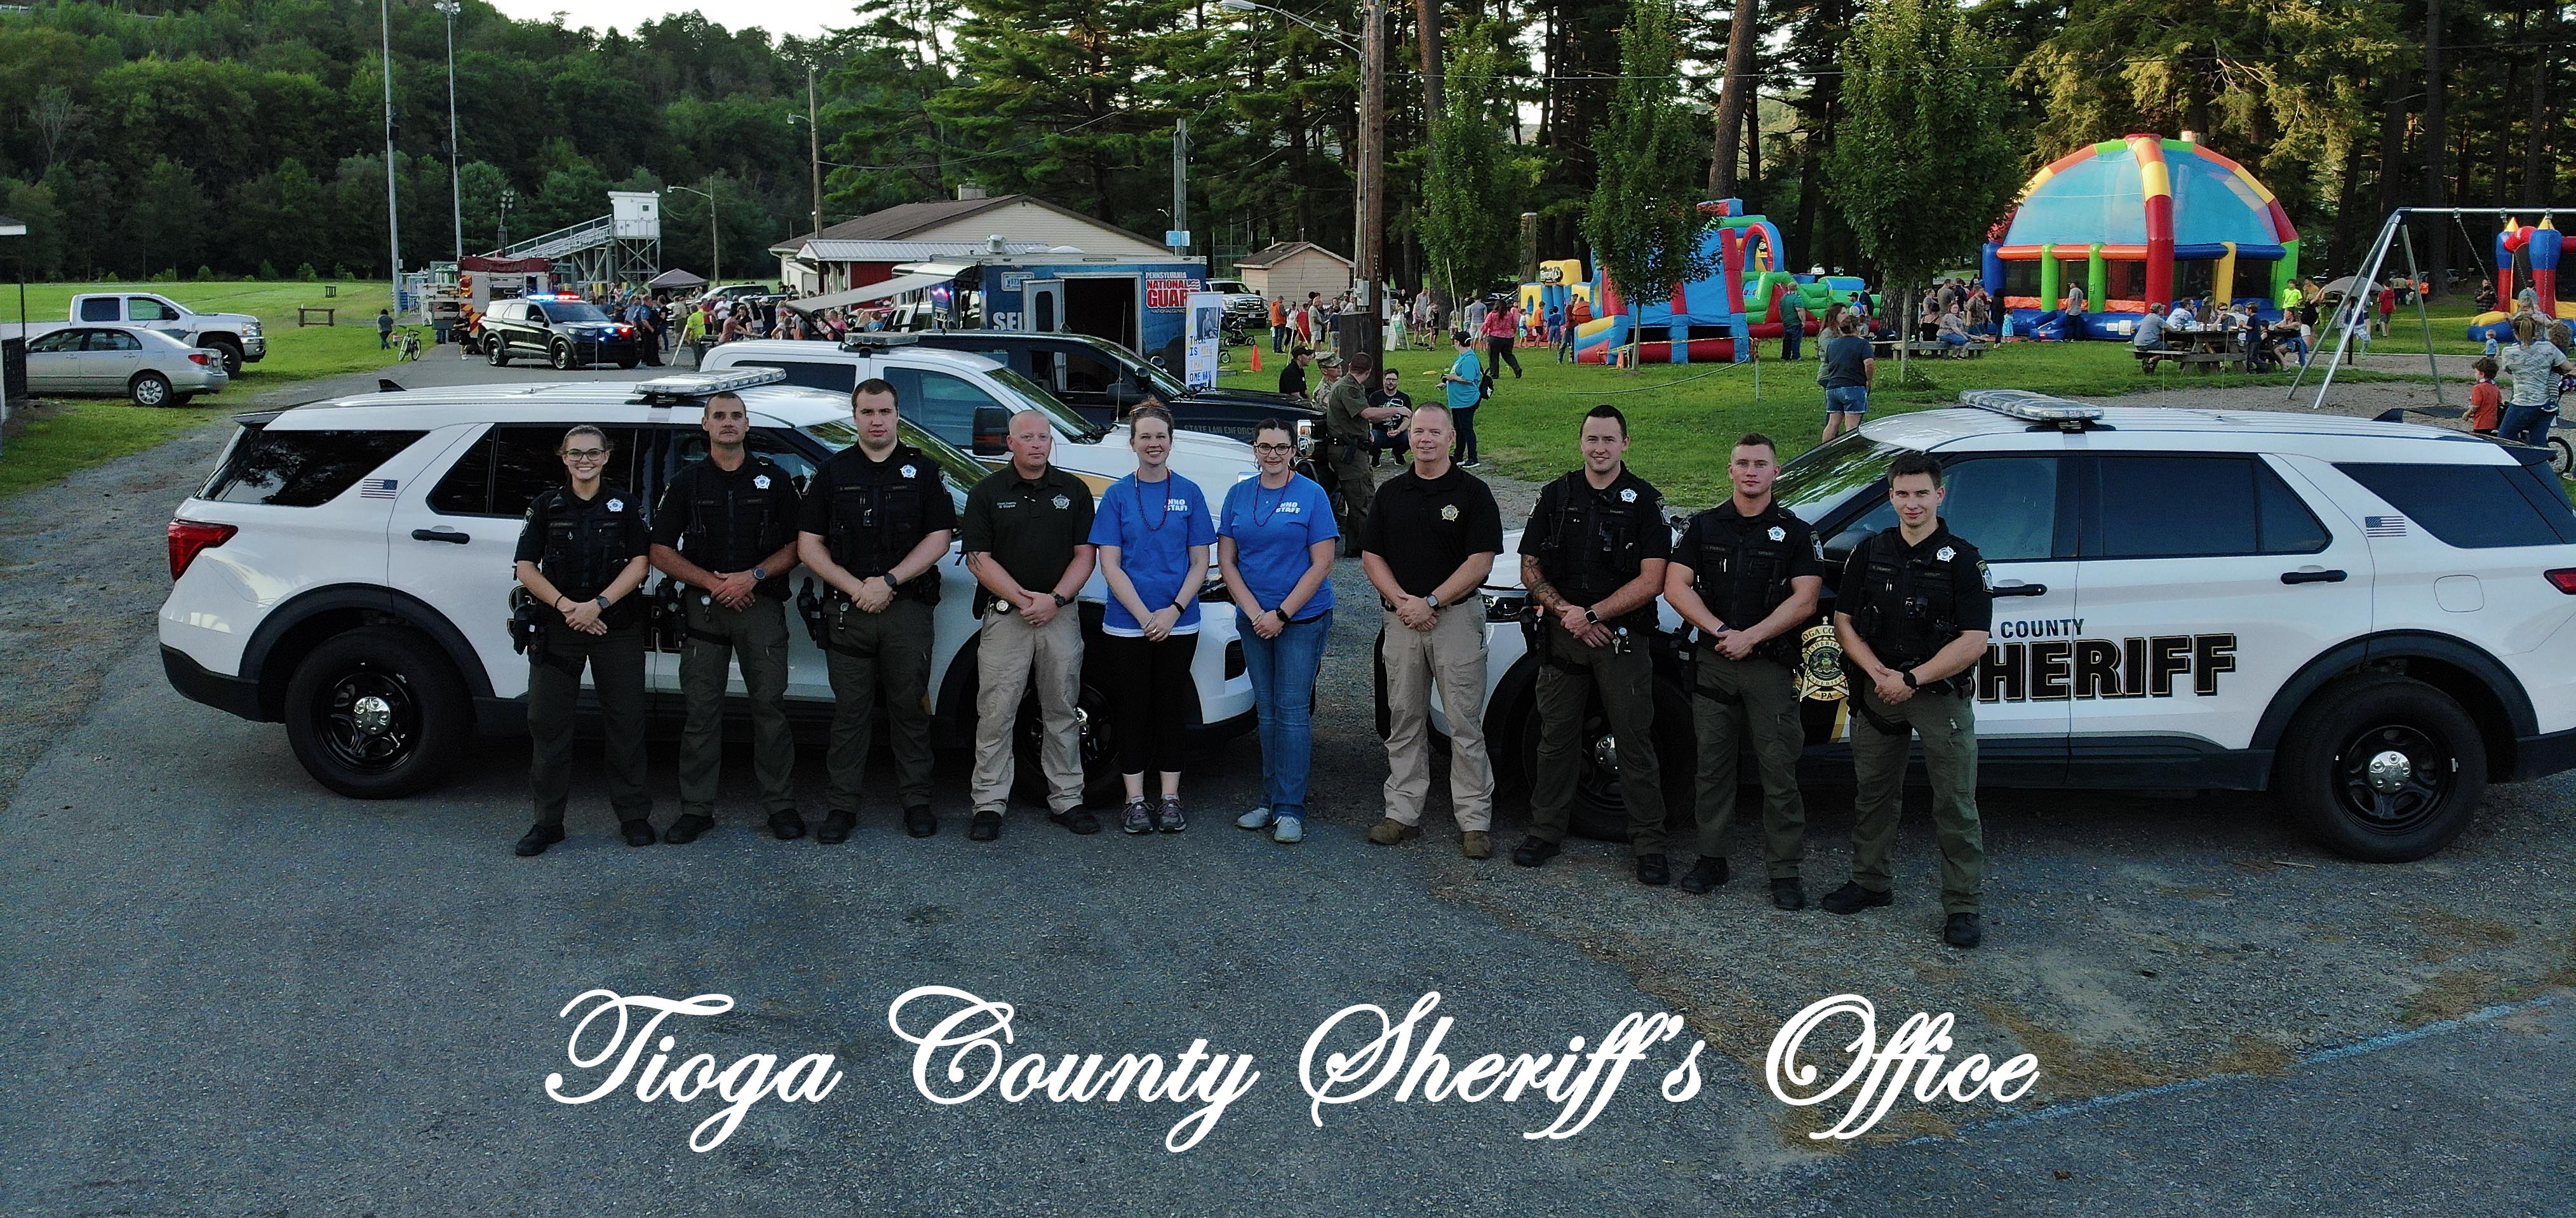 Tioga County Sheriff